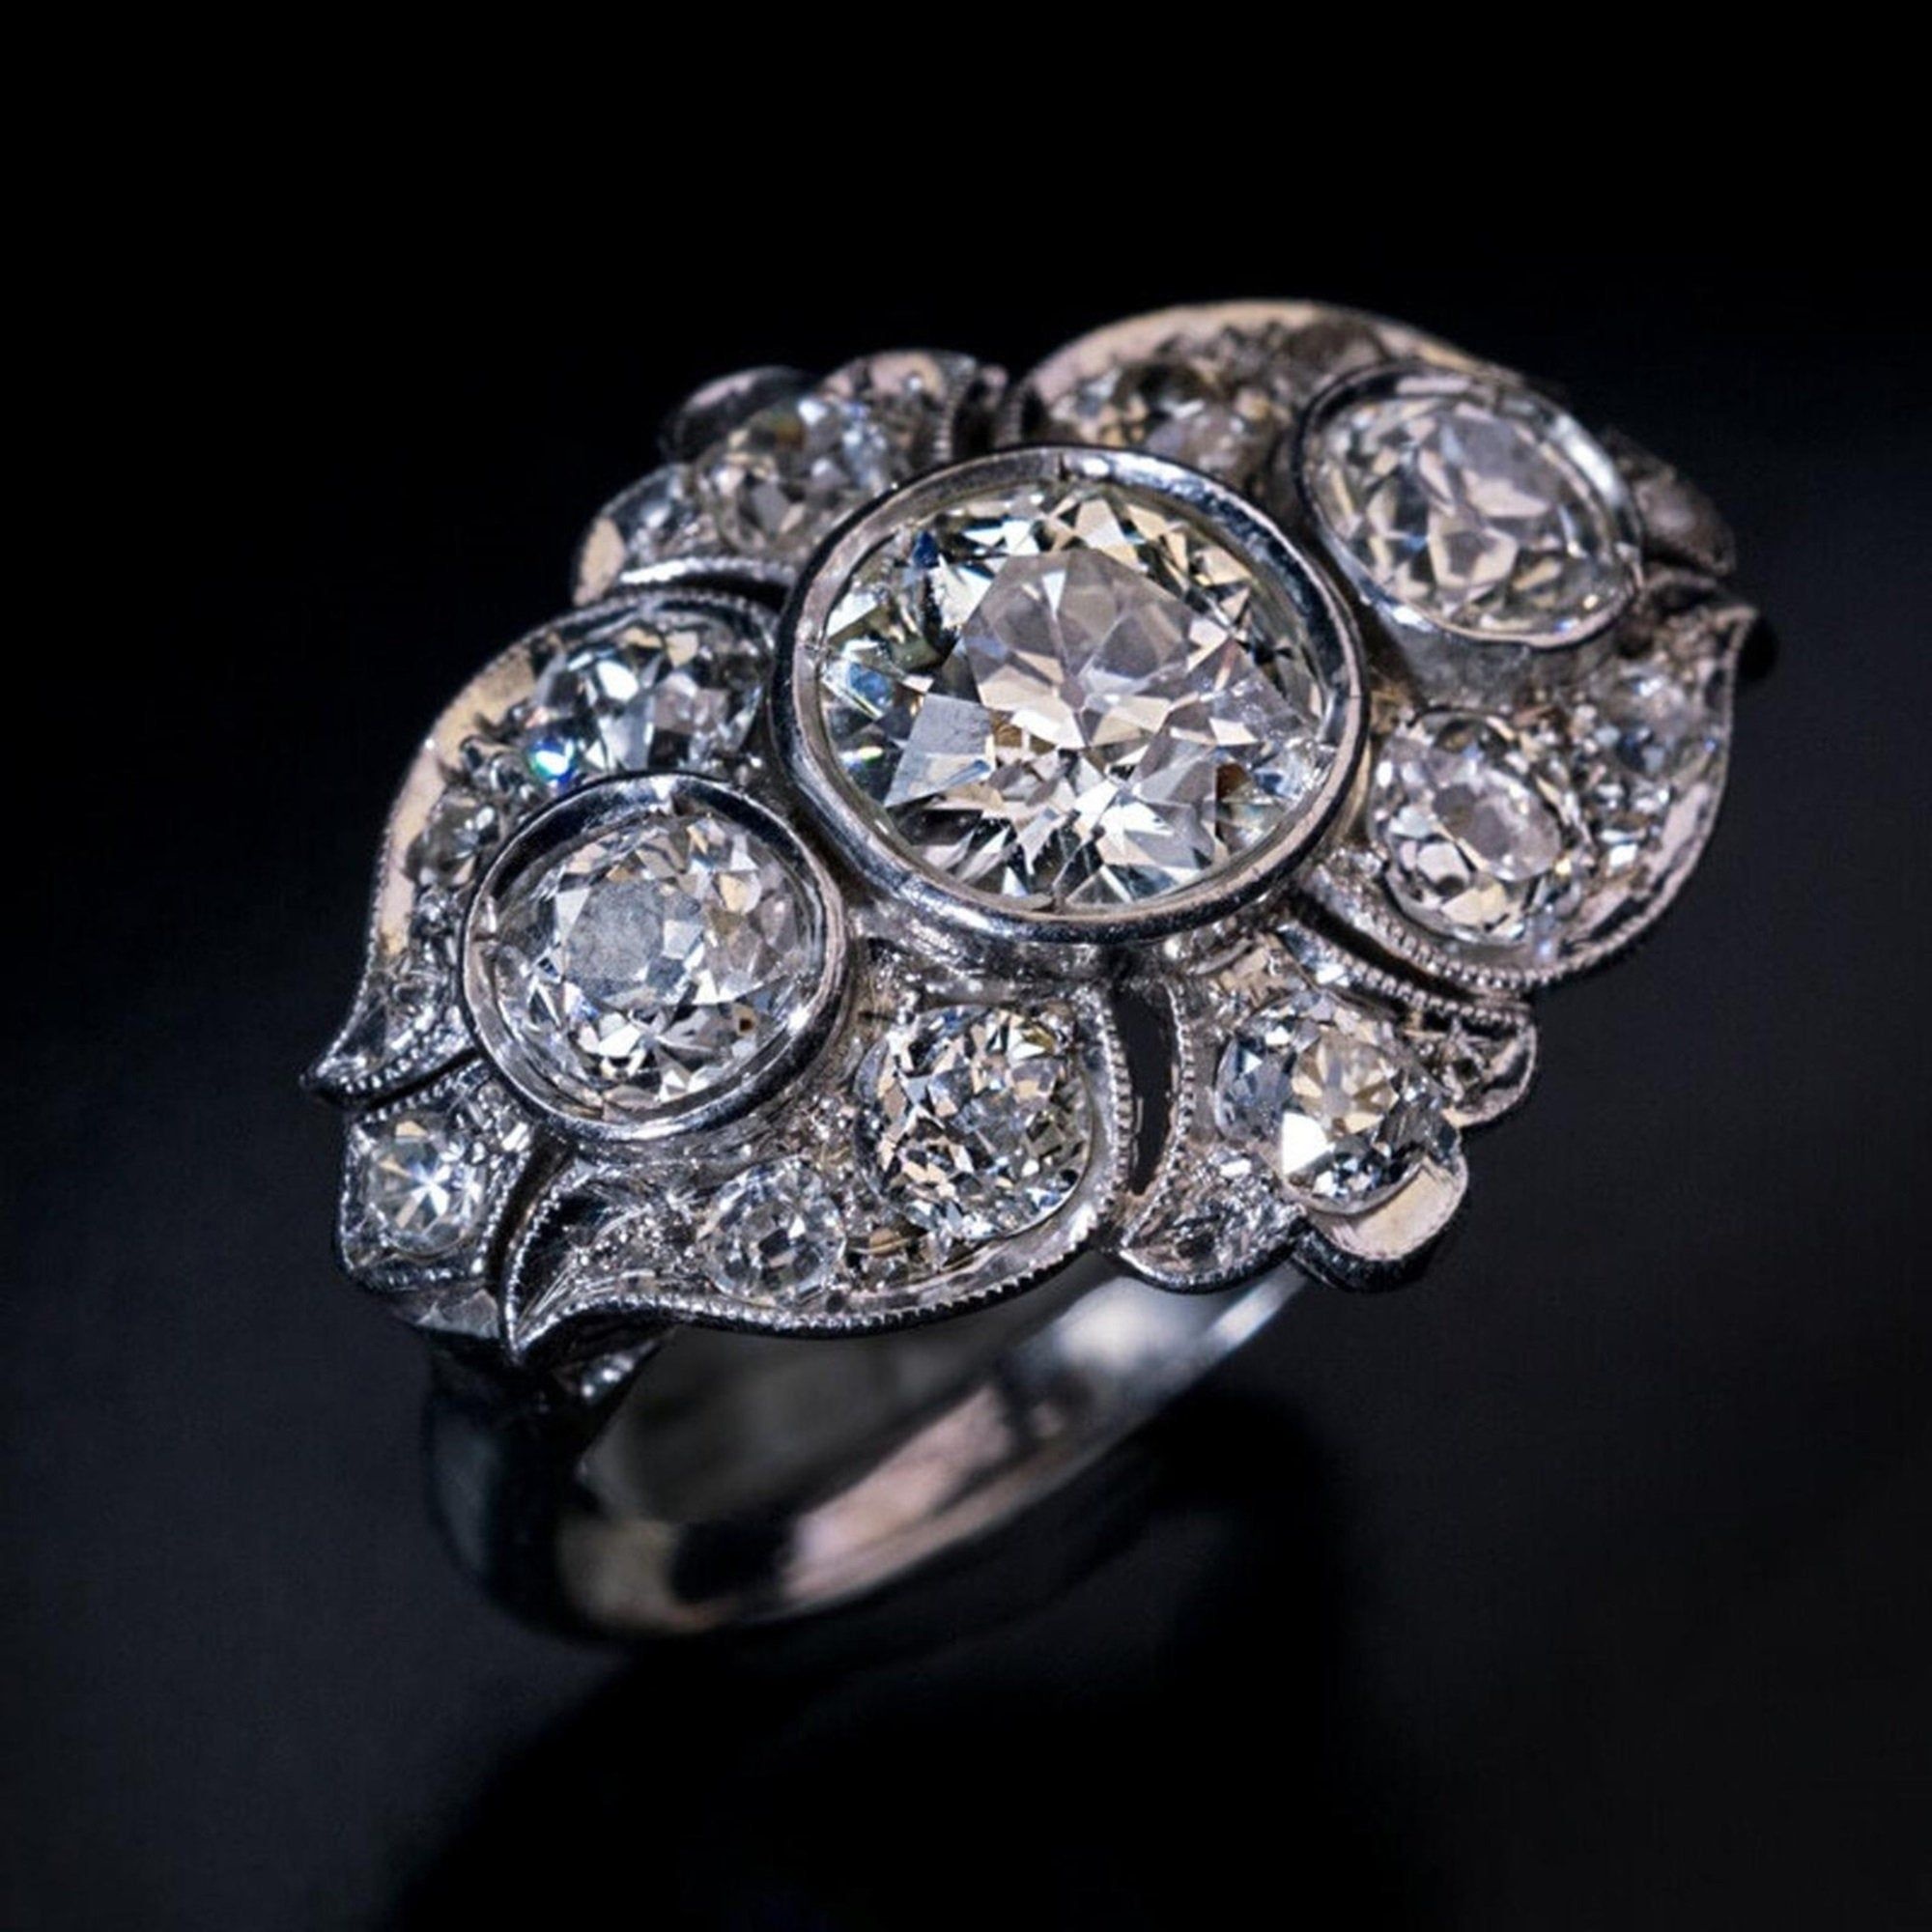 Three-stone old European cut diamond ring, Art deco style, Antique jewelry, Luxurious designs, 2000x2000 HD Handy